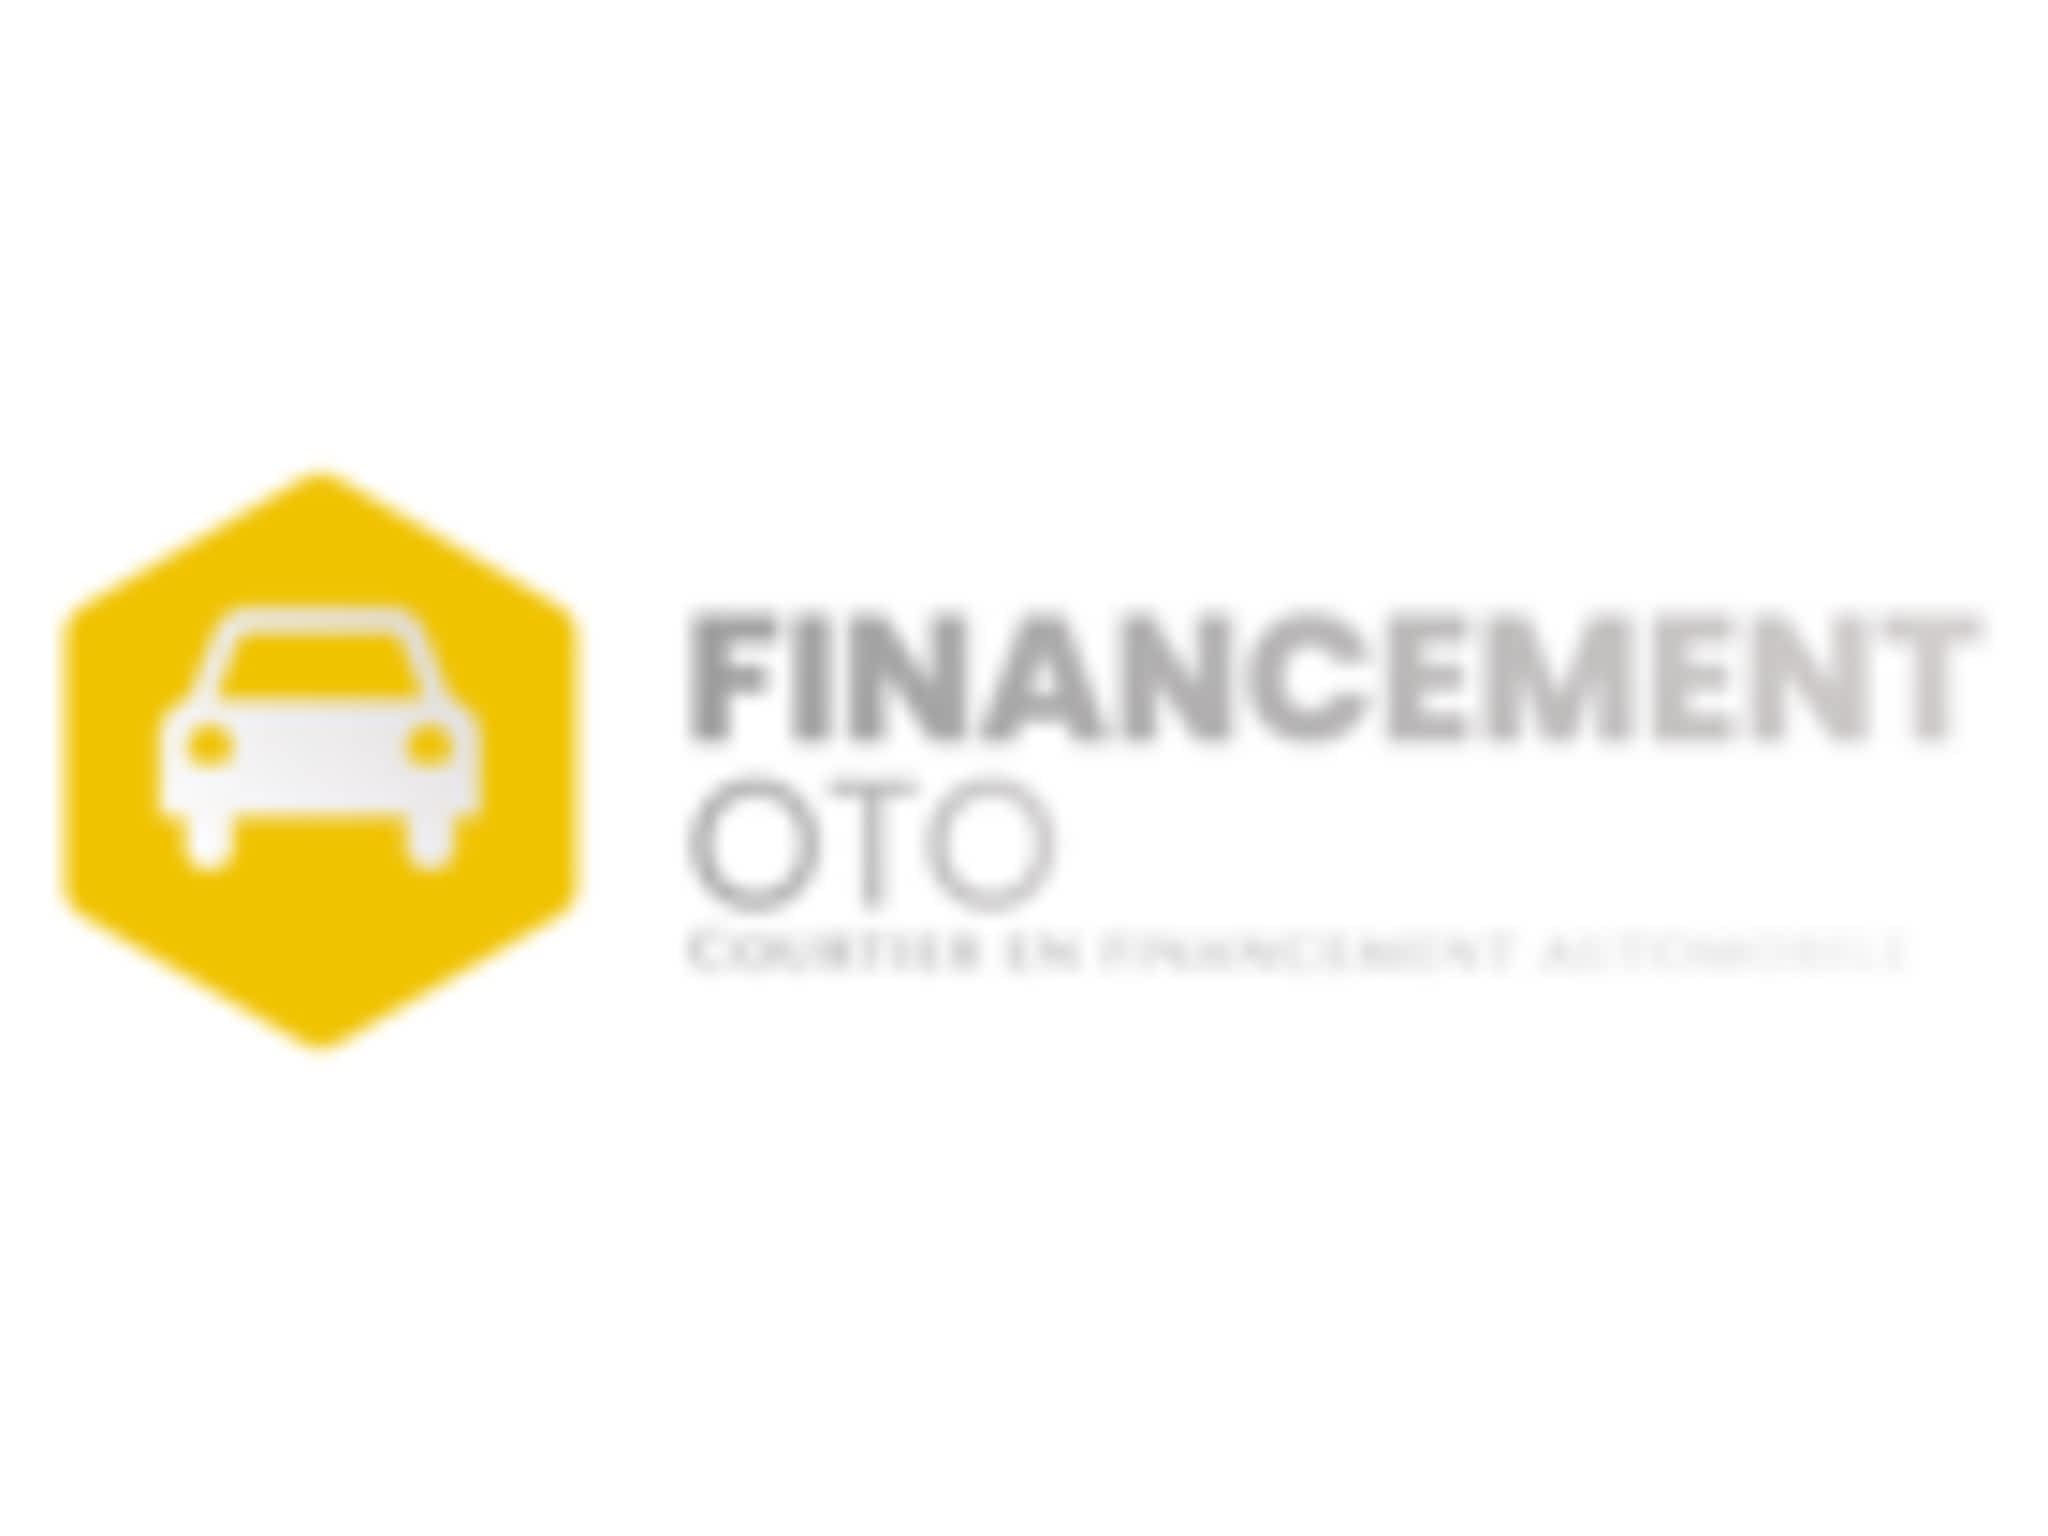 photo Financement OTO